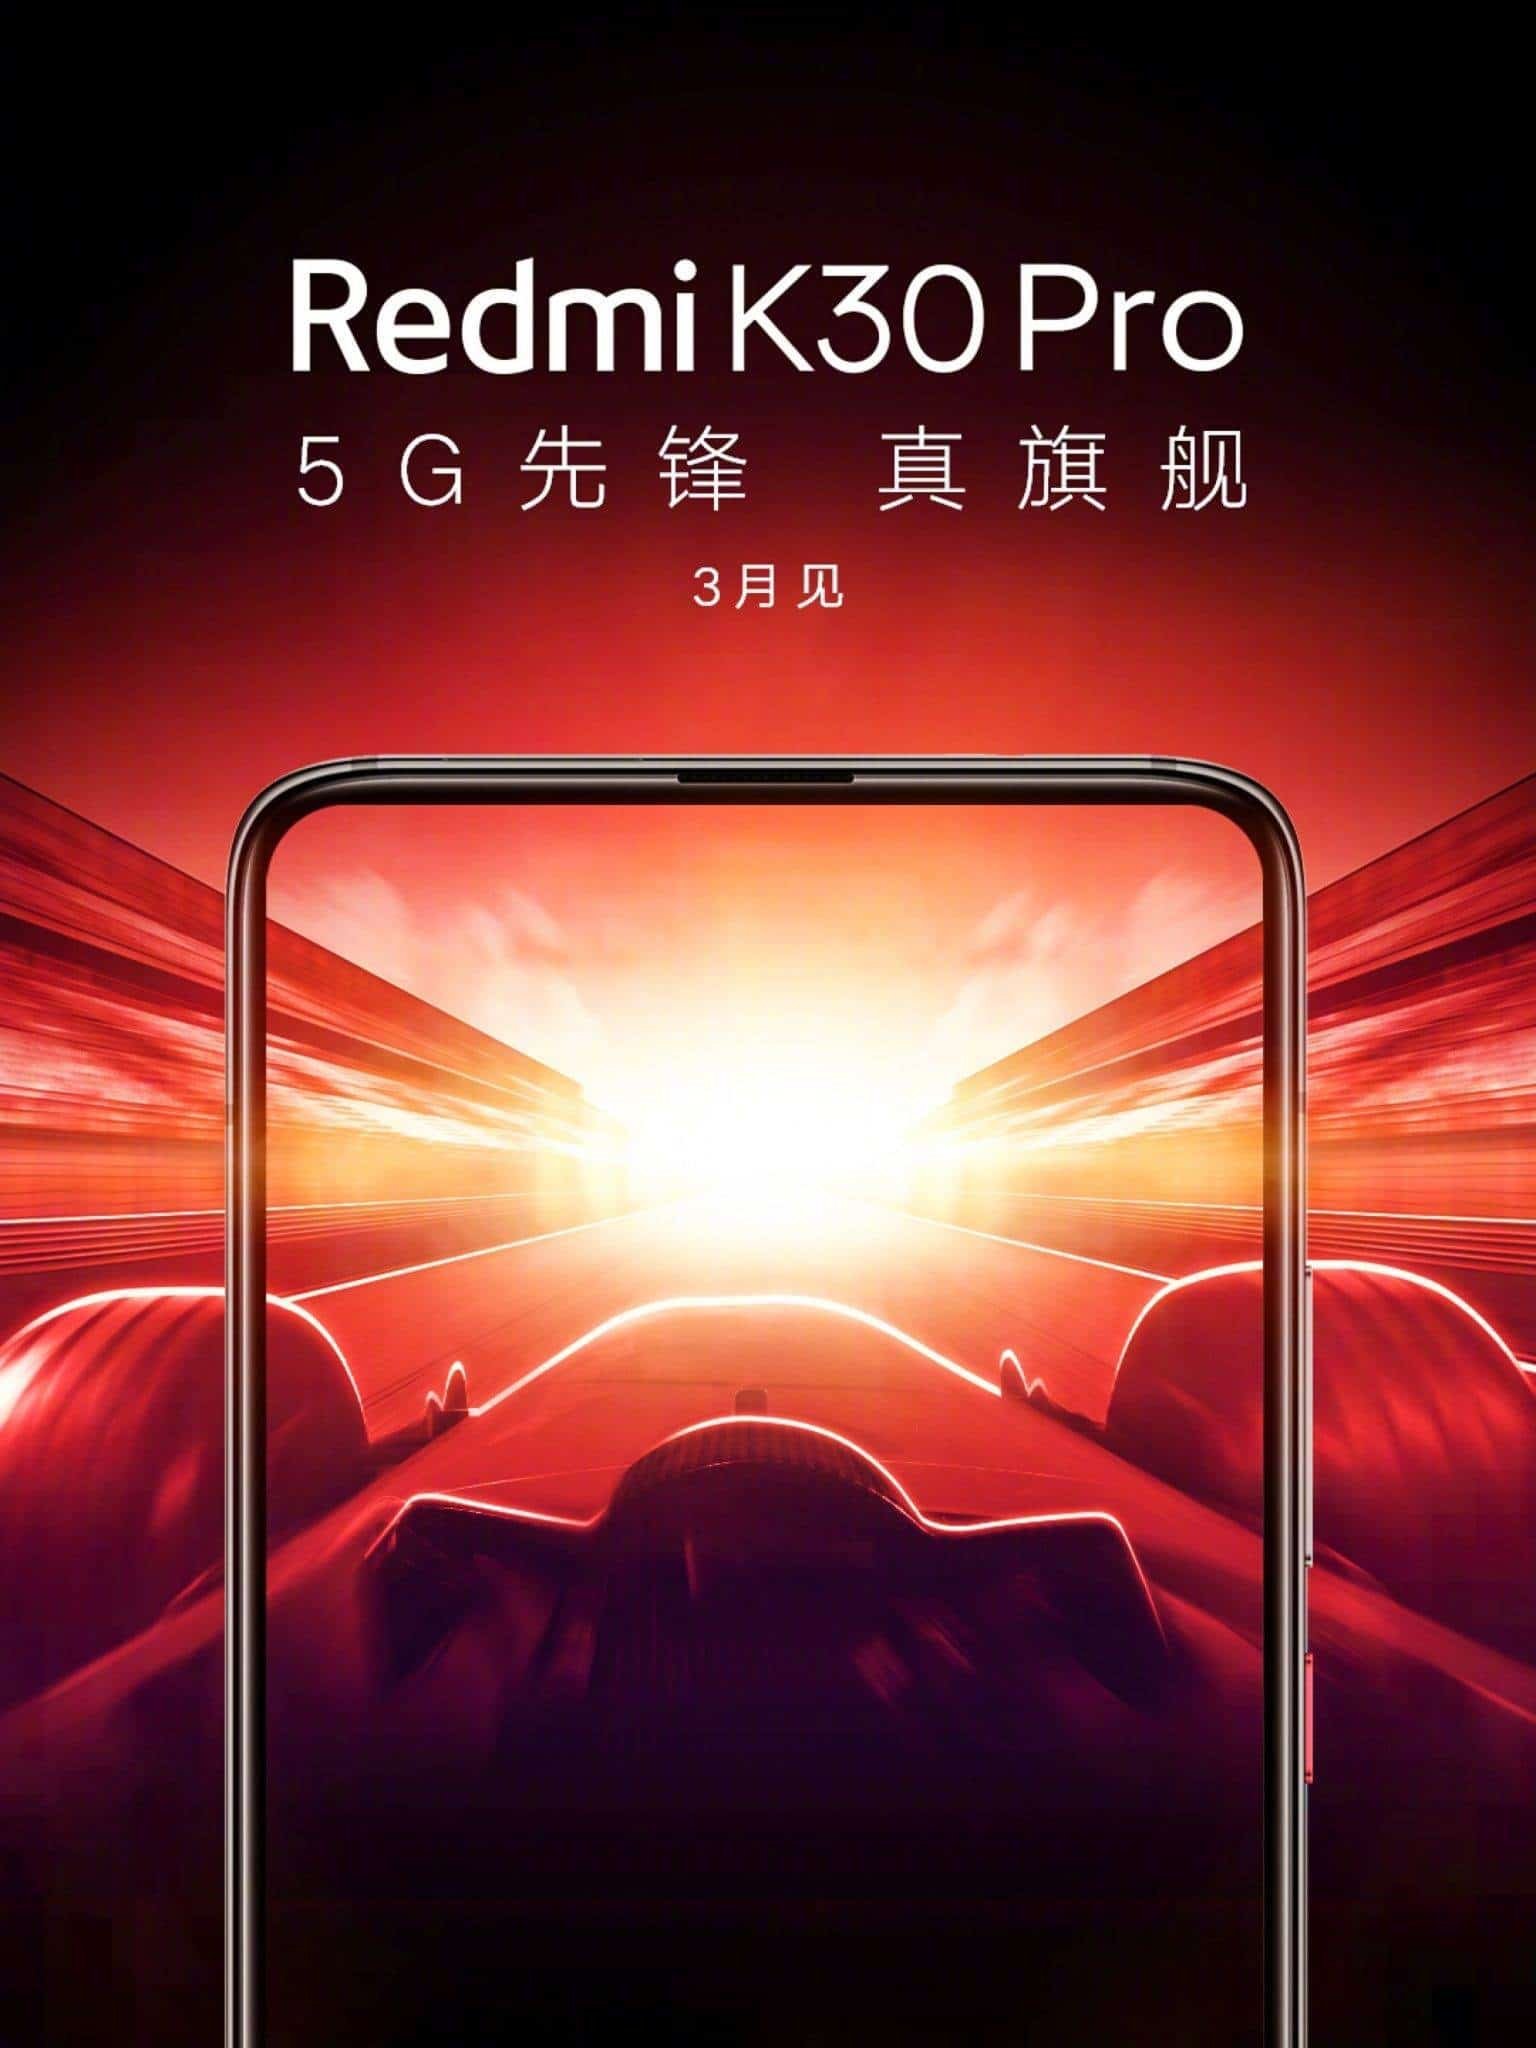 Teaser Redmi K30 Pro